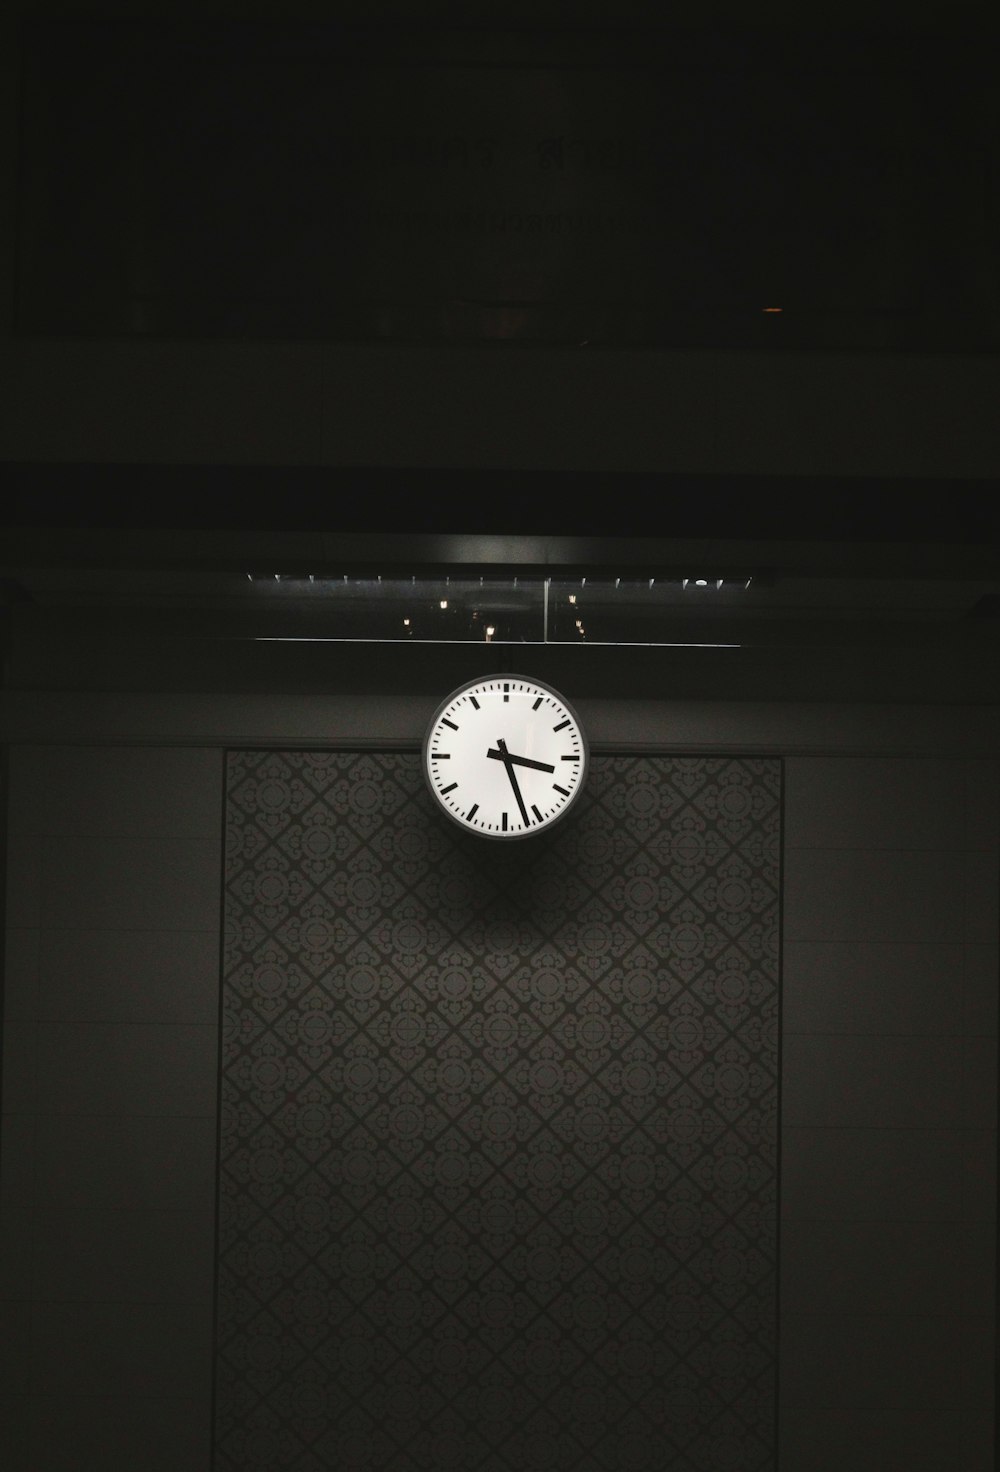 a clock on a wall in a dark room